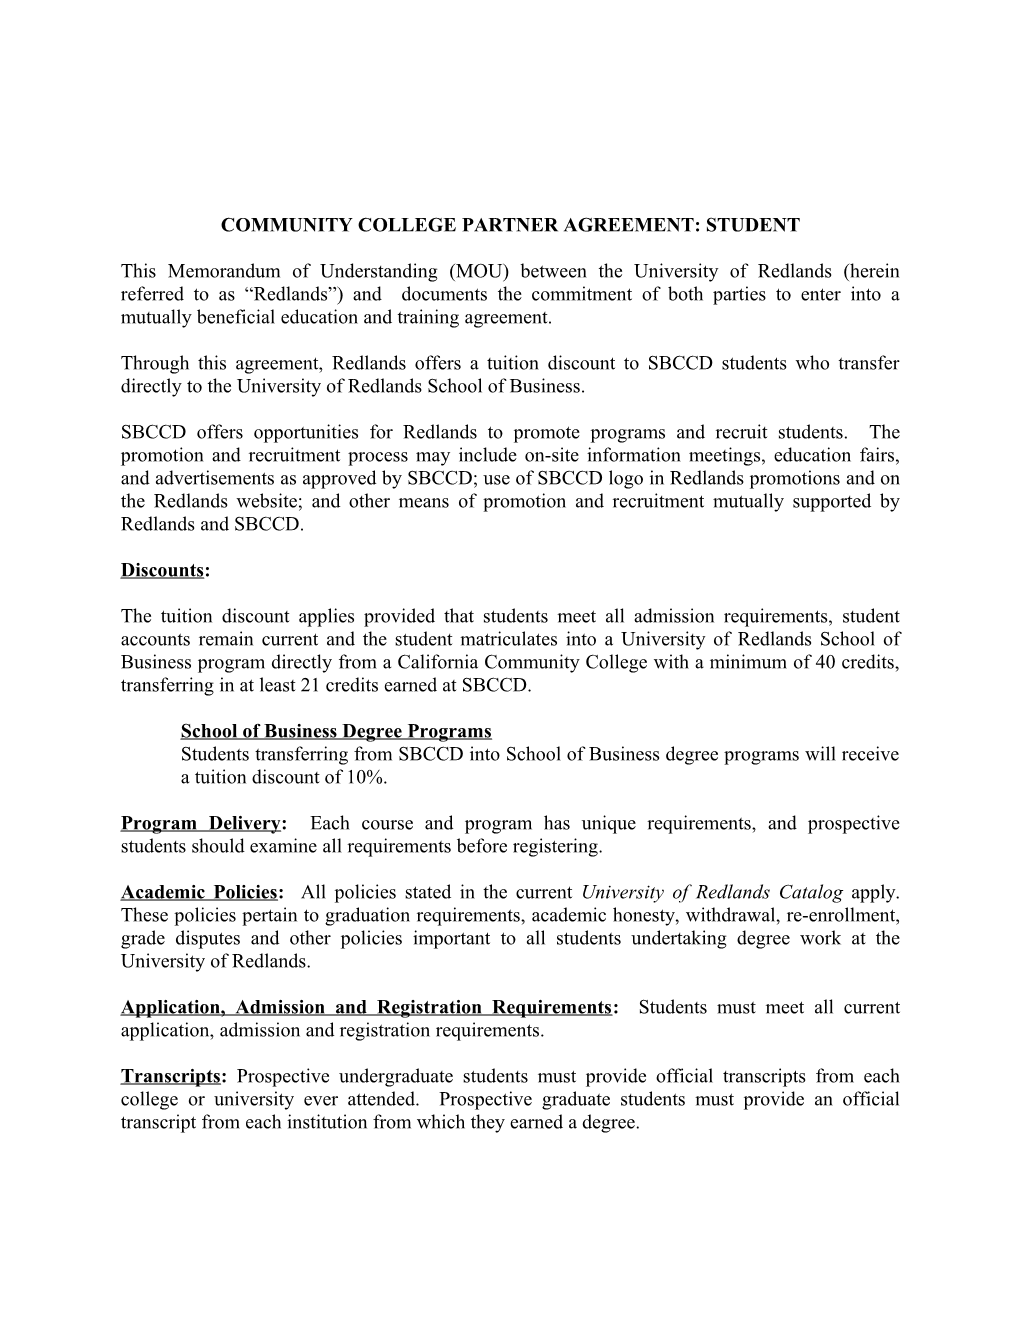 Community College Partner Agreement: Student